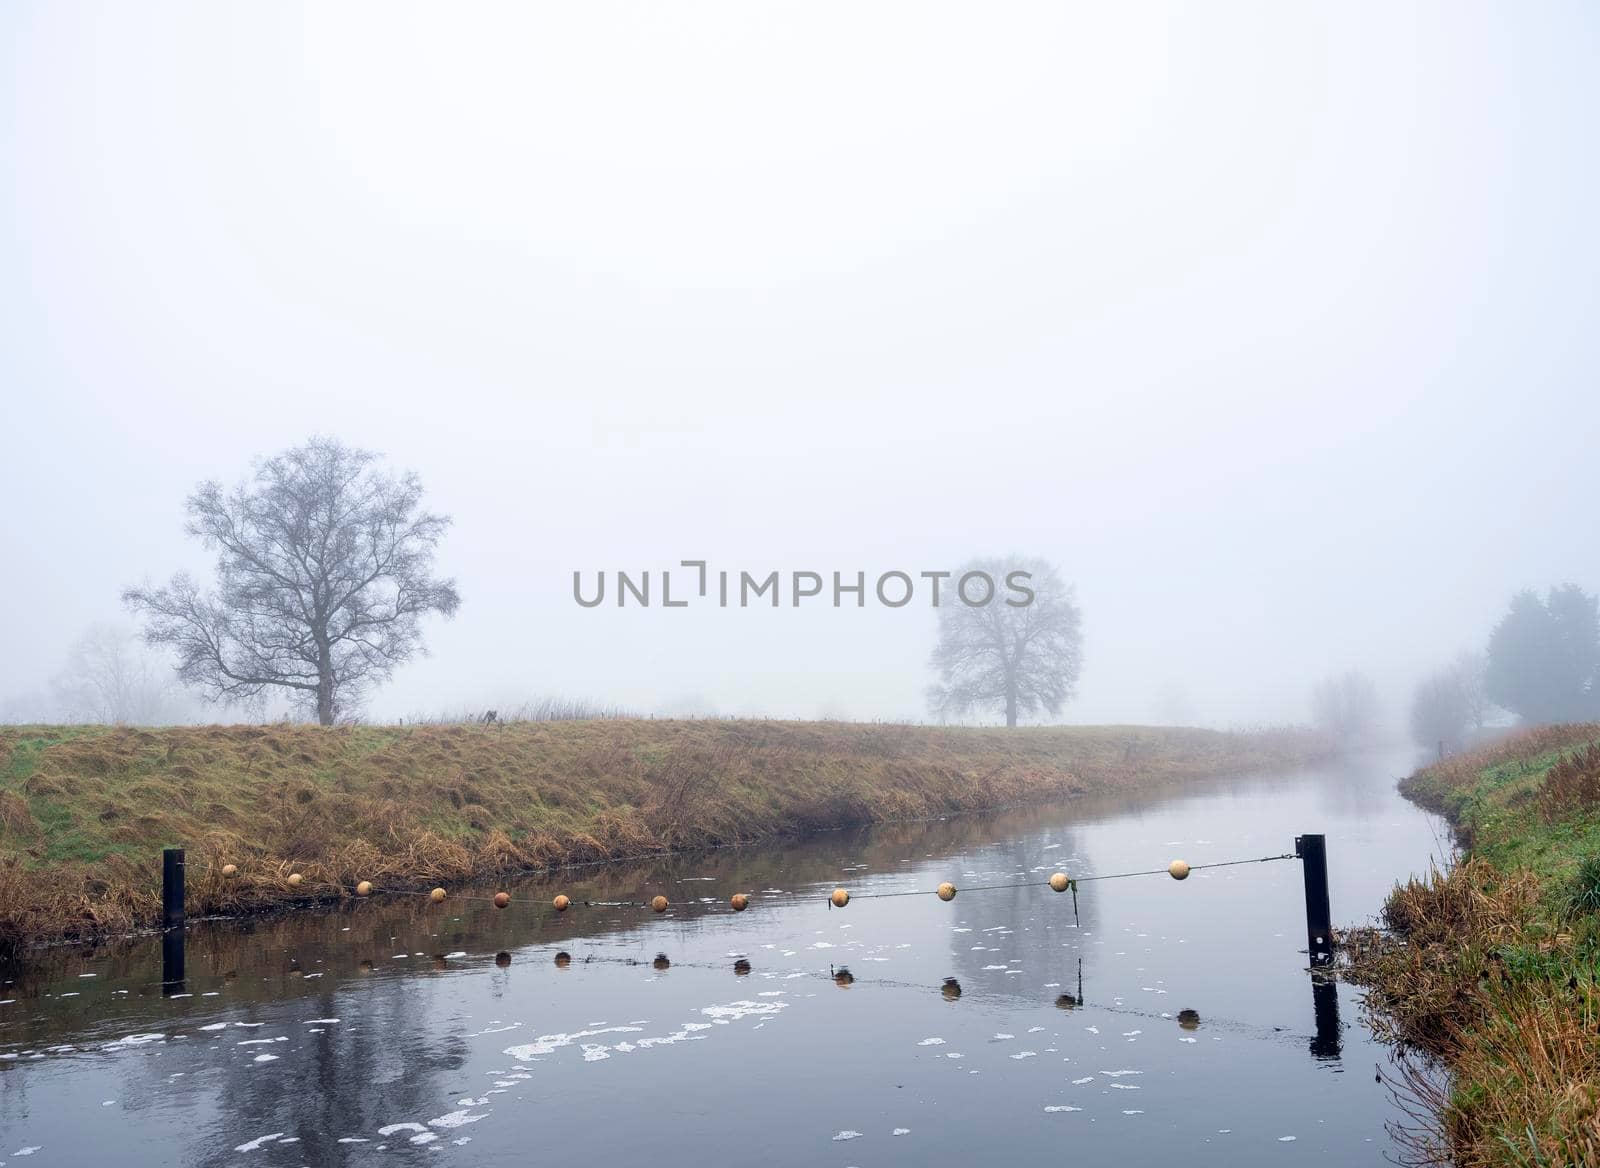 valleikanaal or valley canal near veenendaal in dutch province of utrecht on misty winter day